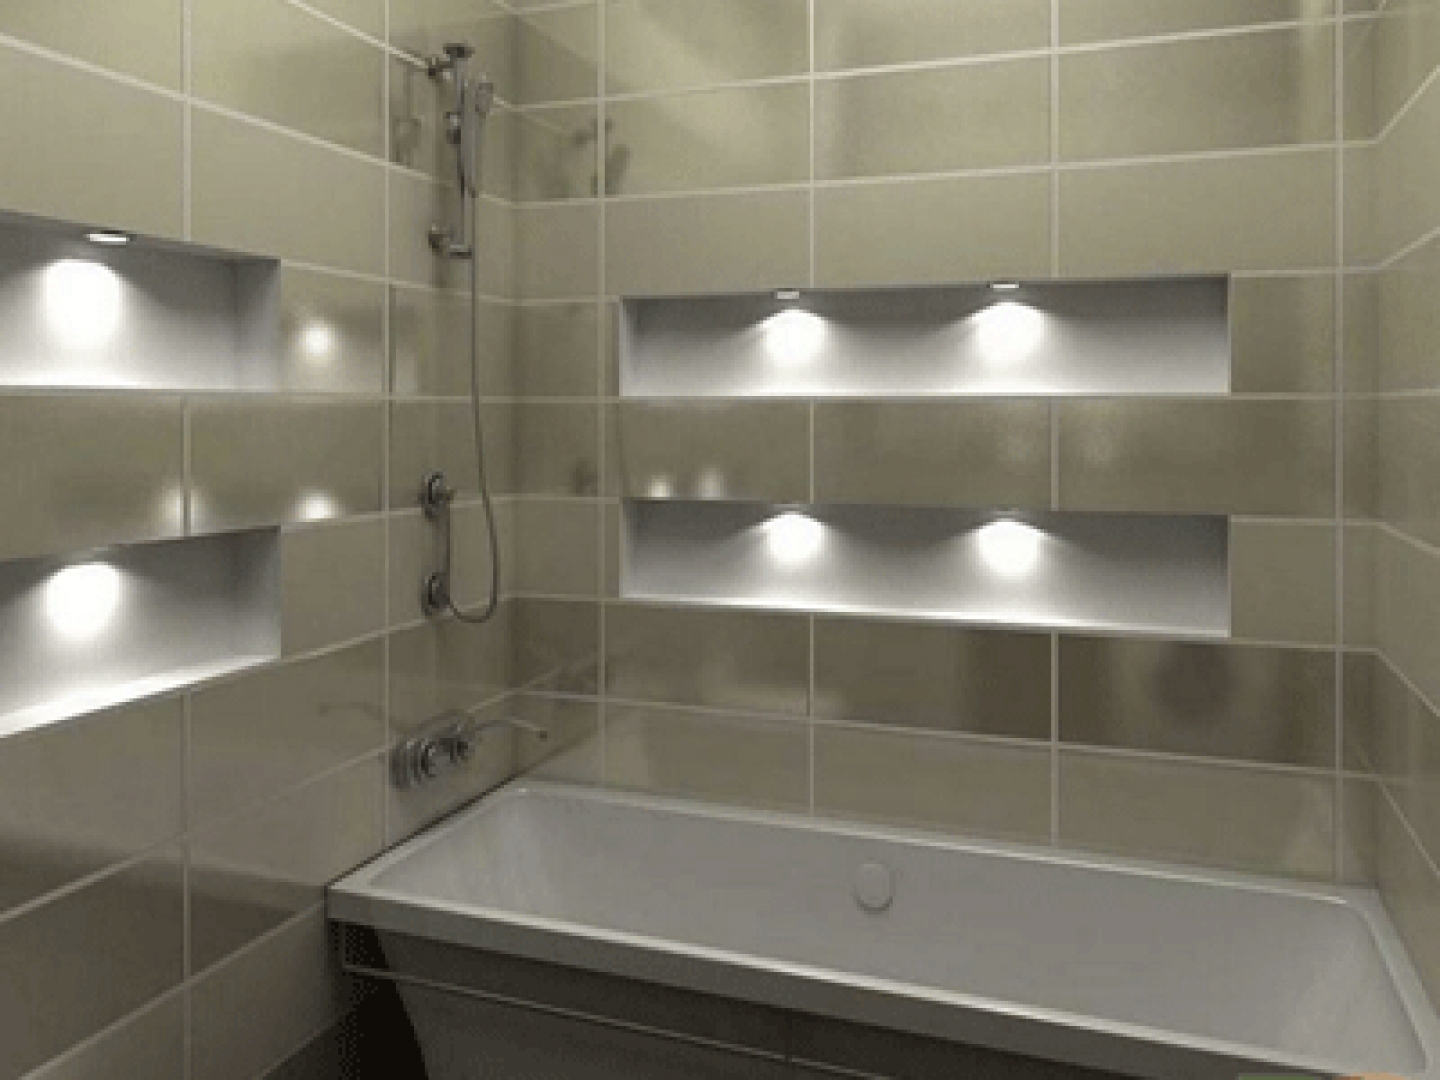 Modern-Interior-Design-and-Bathroom-Chic-Gray-Small-Bathroom-Tile-Design-Idea-With-Glossy-White-Lamps-And-Gray-Bathtub-Cool-Small-Bathroom-Tile-Design-Bathroom-Lamps-Design-Ideas